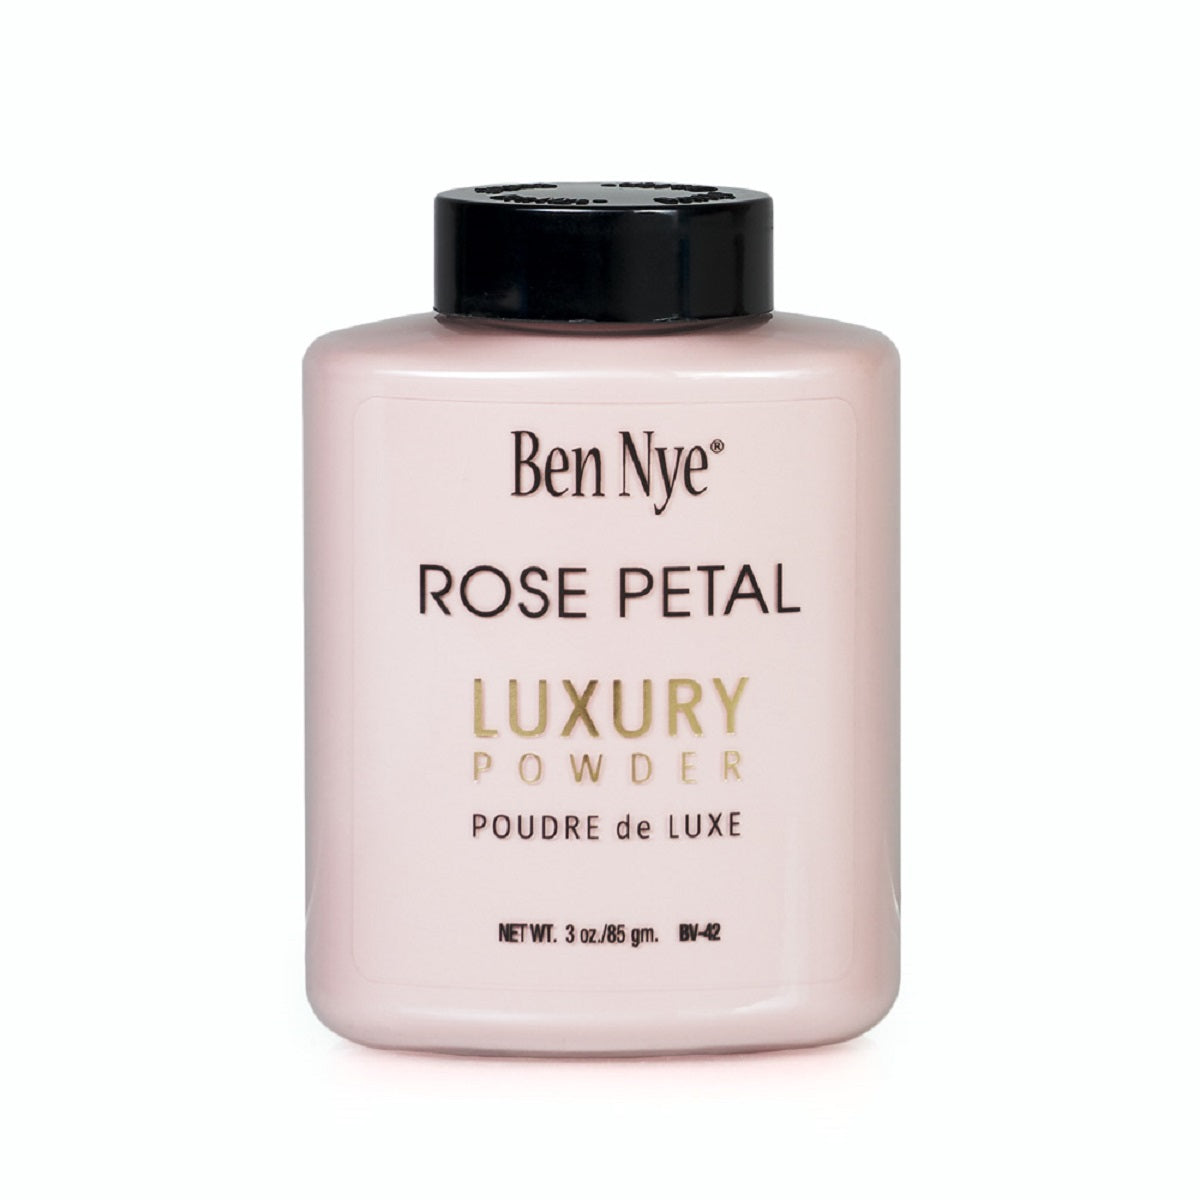 Rose Petal Luxury Powder 3 Oz